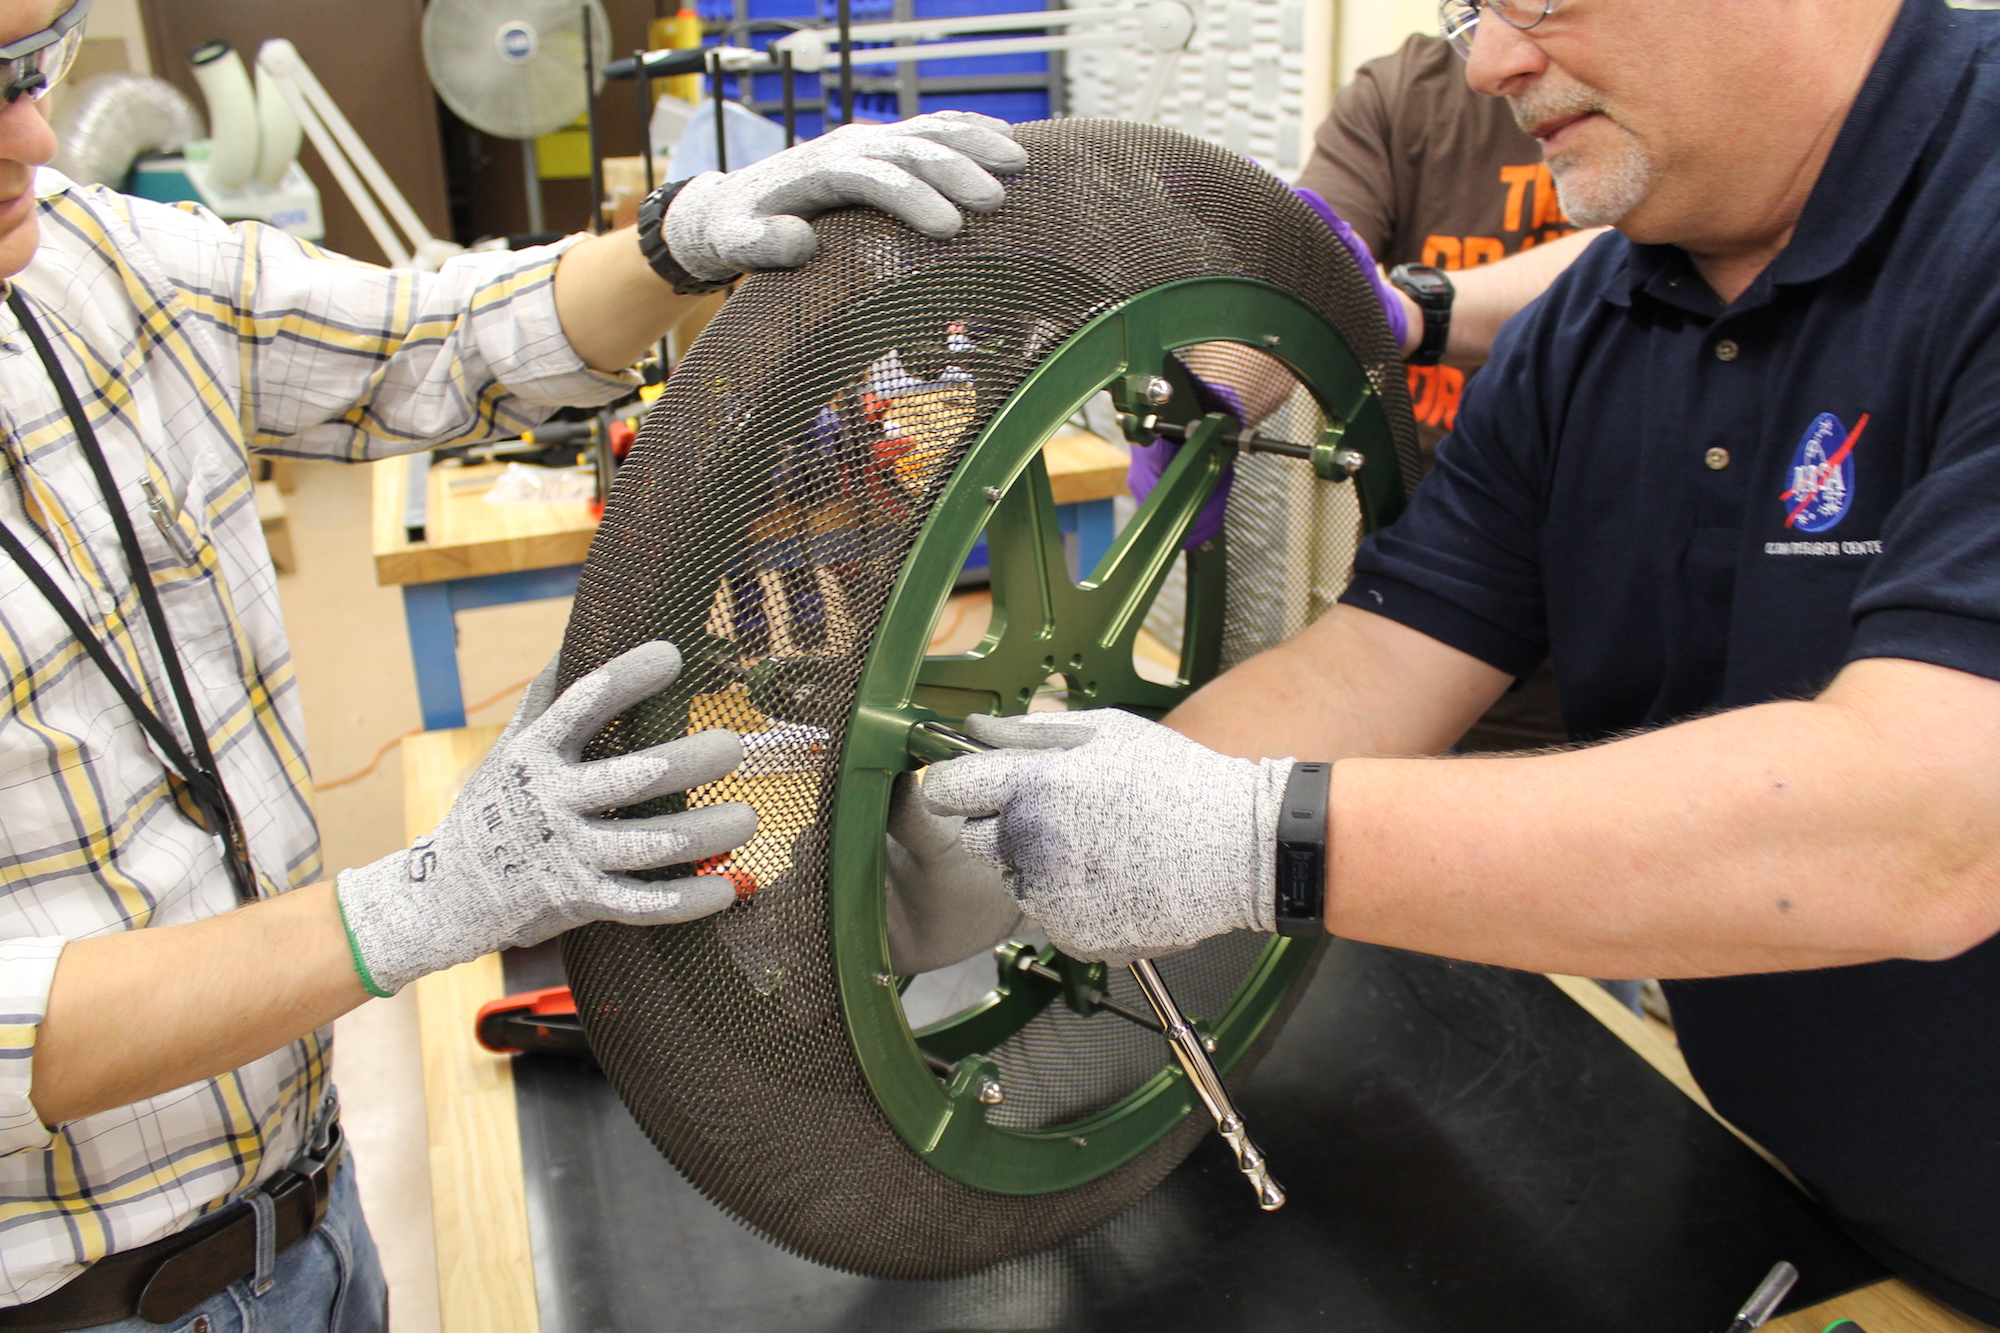 Airless Tires Using NASA's Rover Tech